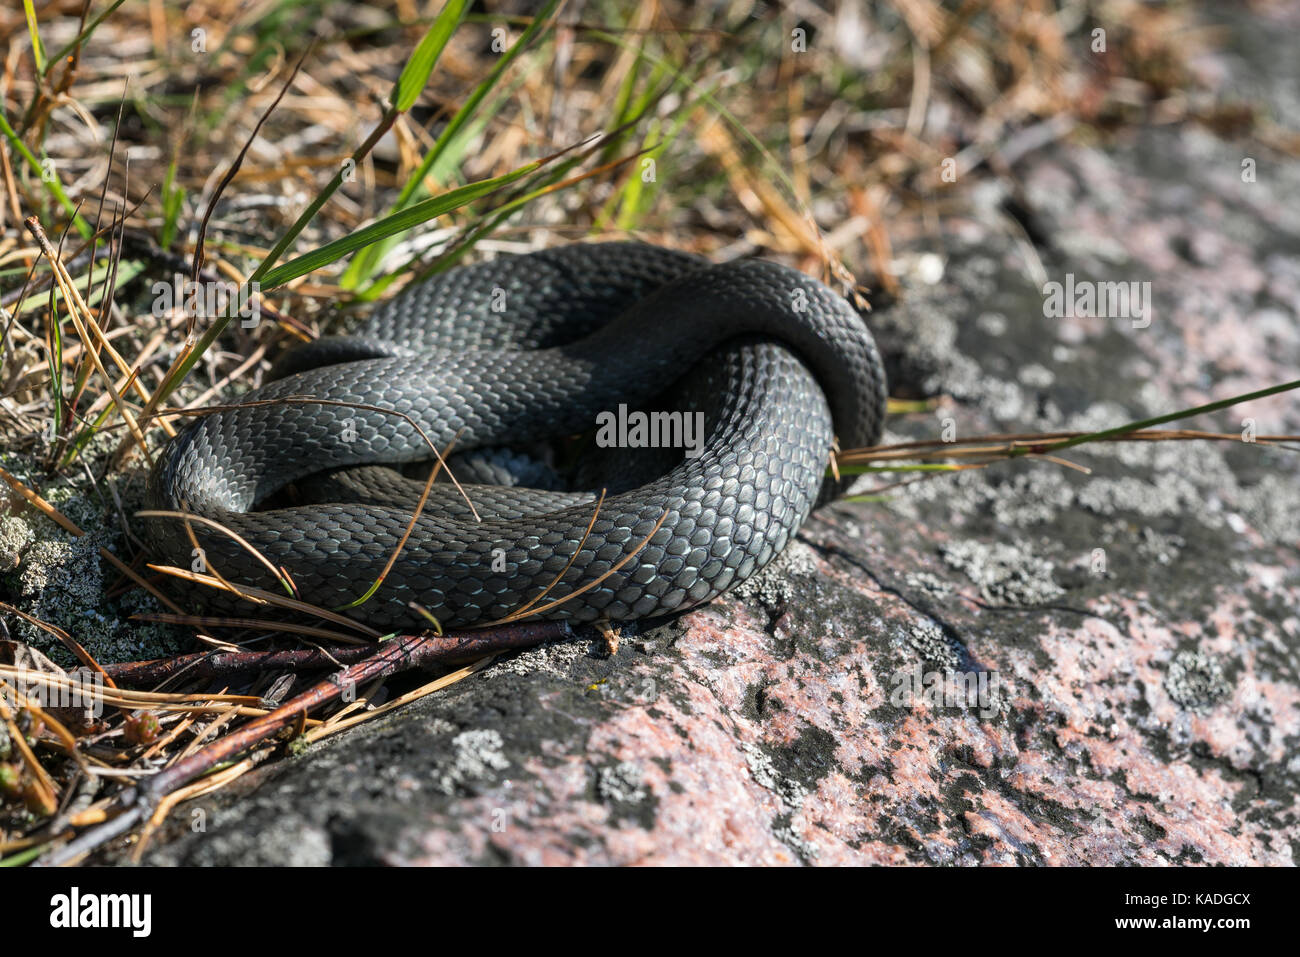 Grass snake trying to get warm in the autumn sun, Kirkkonummi archipelago, Finland, Europe, EU Stock Photo